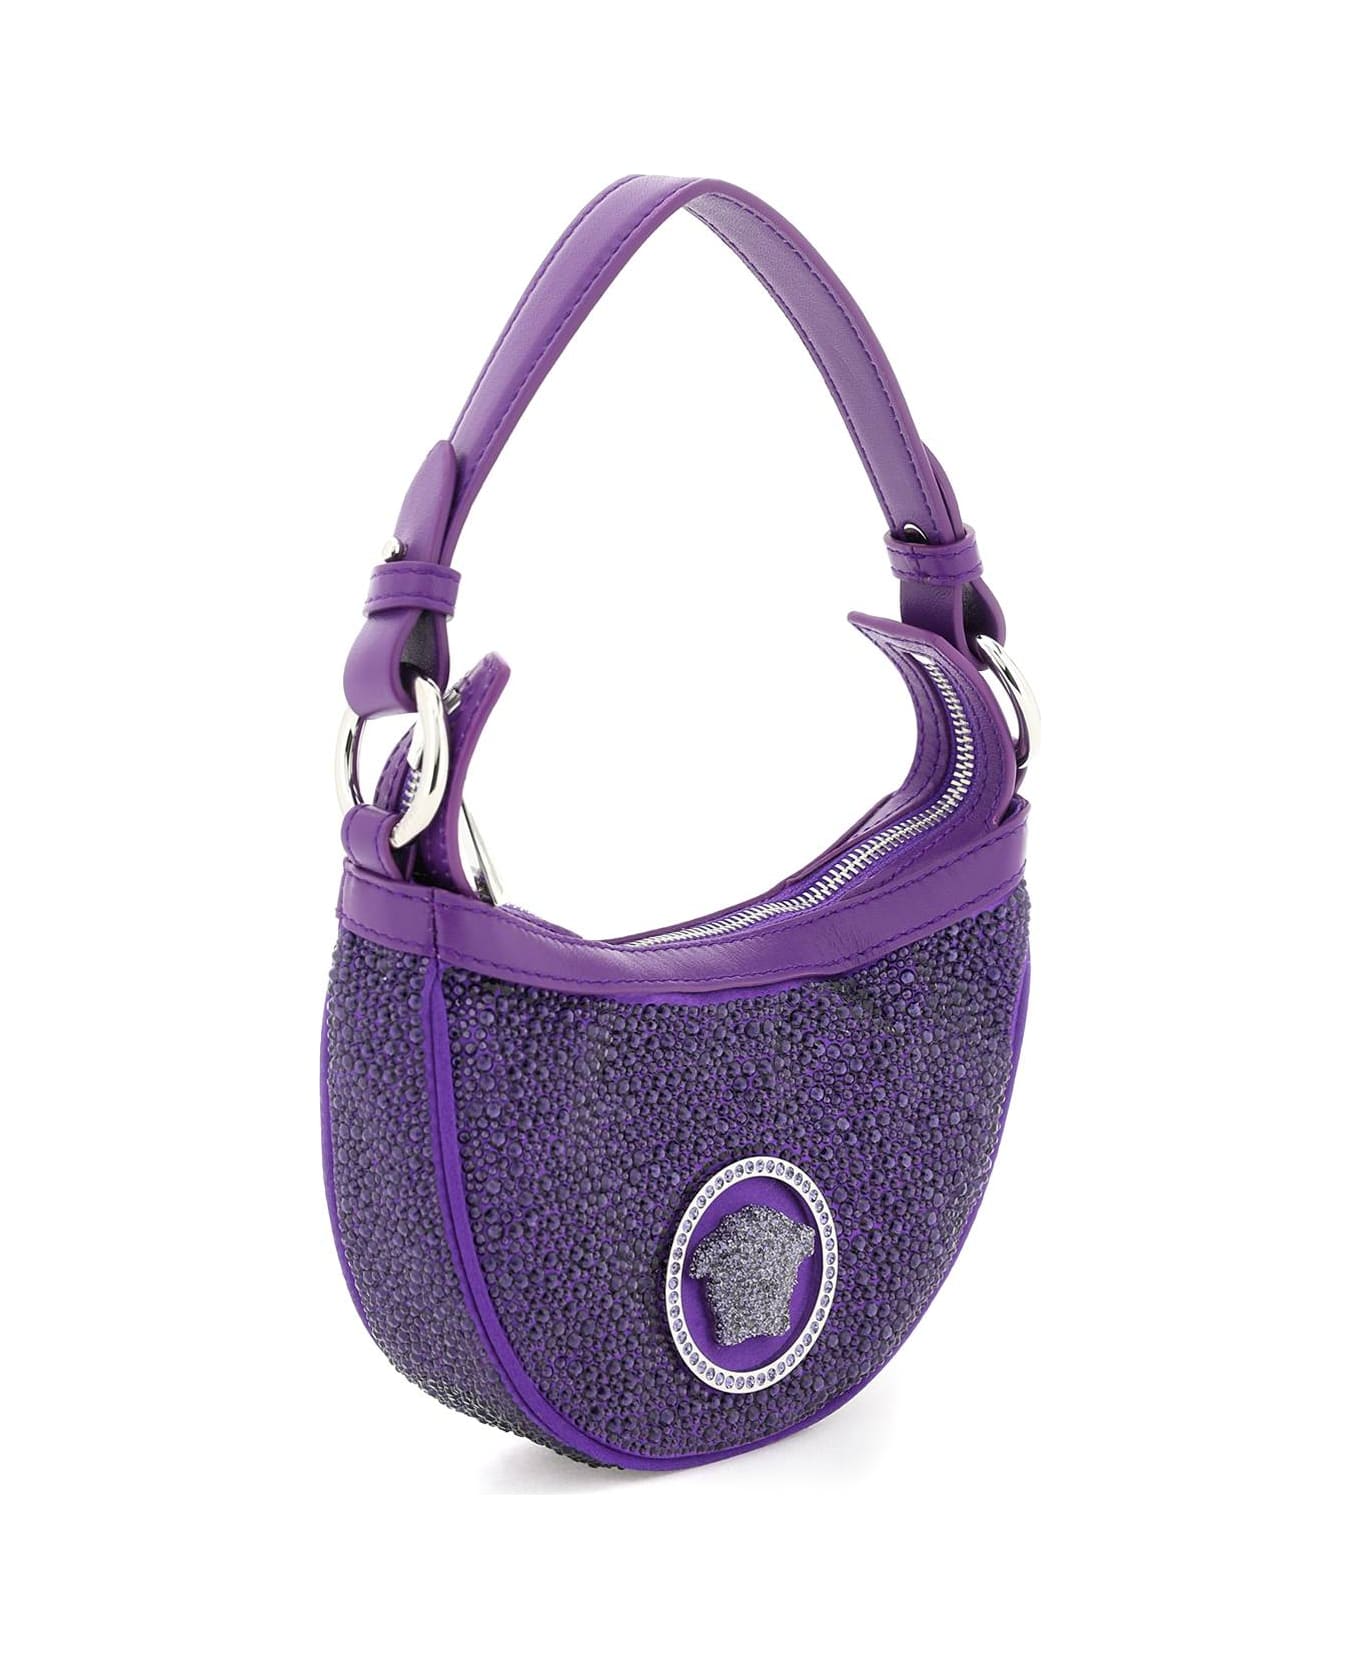 Versace Mini Hobo Bag With Crystals - DARK ORCHID PALLADIUM (Purple)